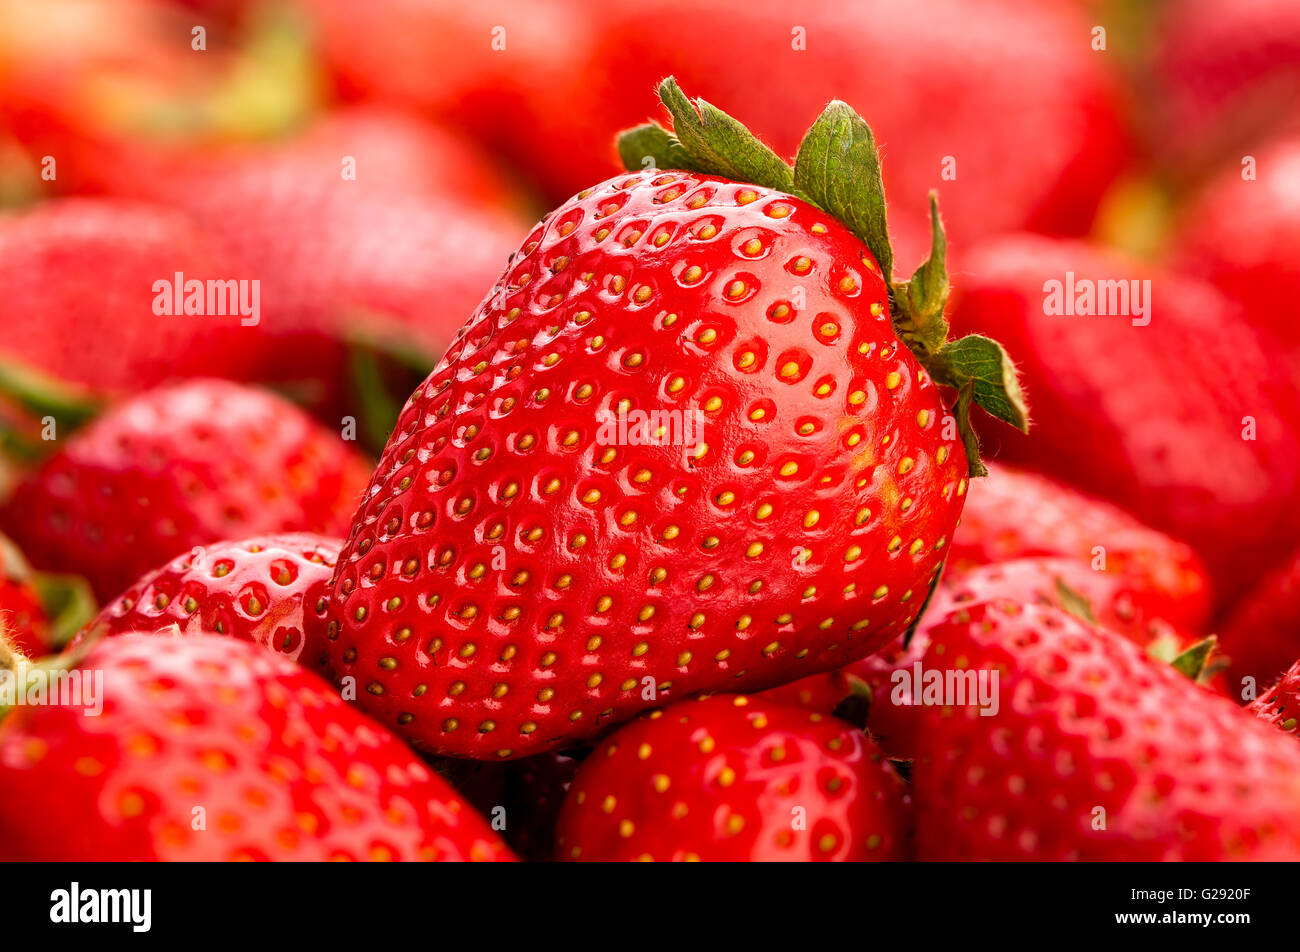 Erdbeer-Nahaufnahme Stockfoto